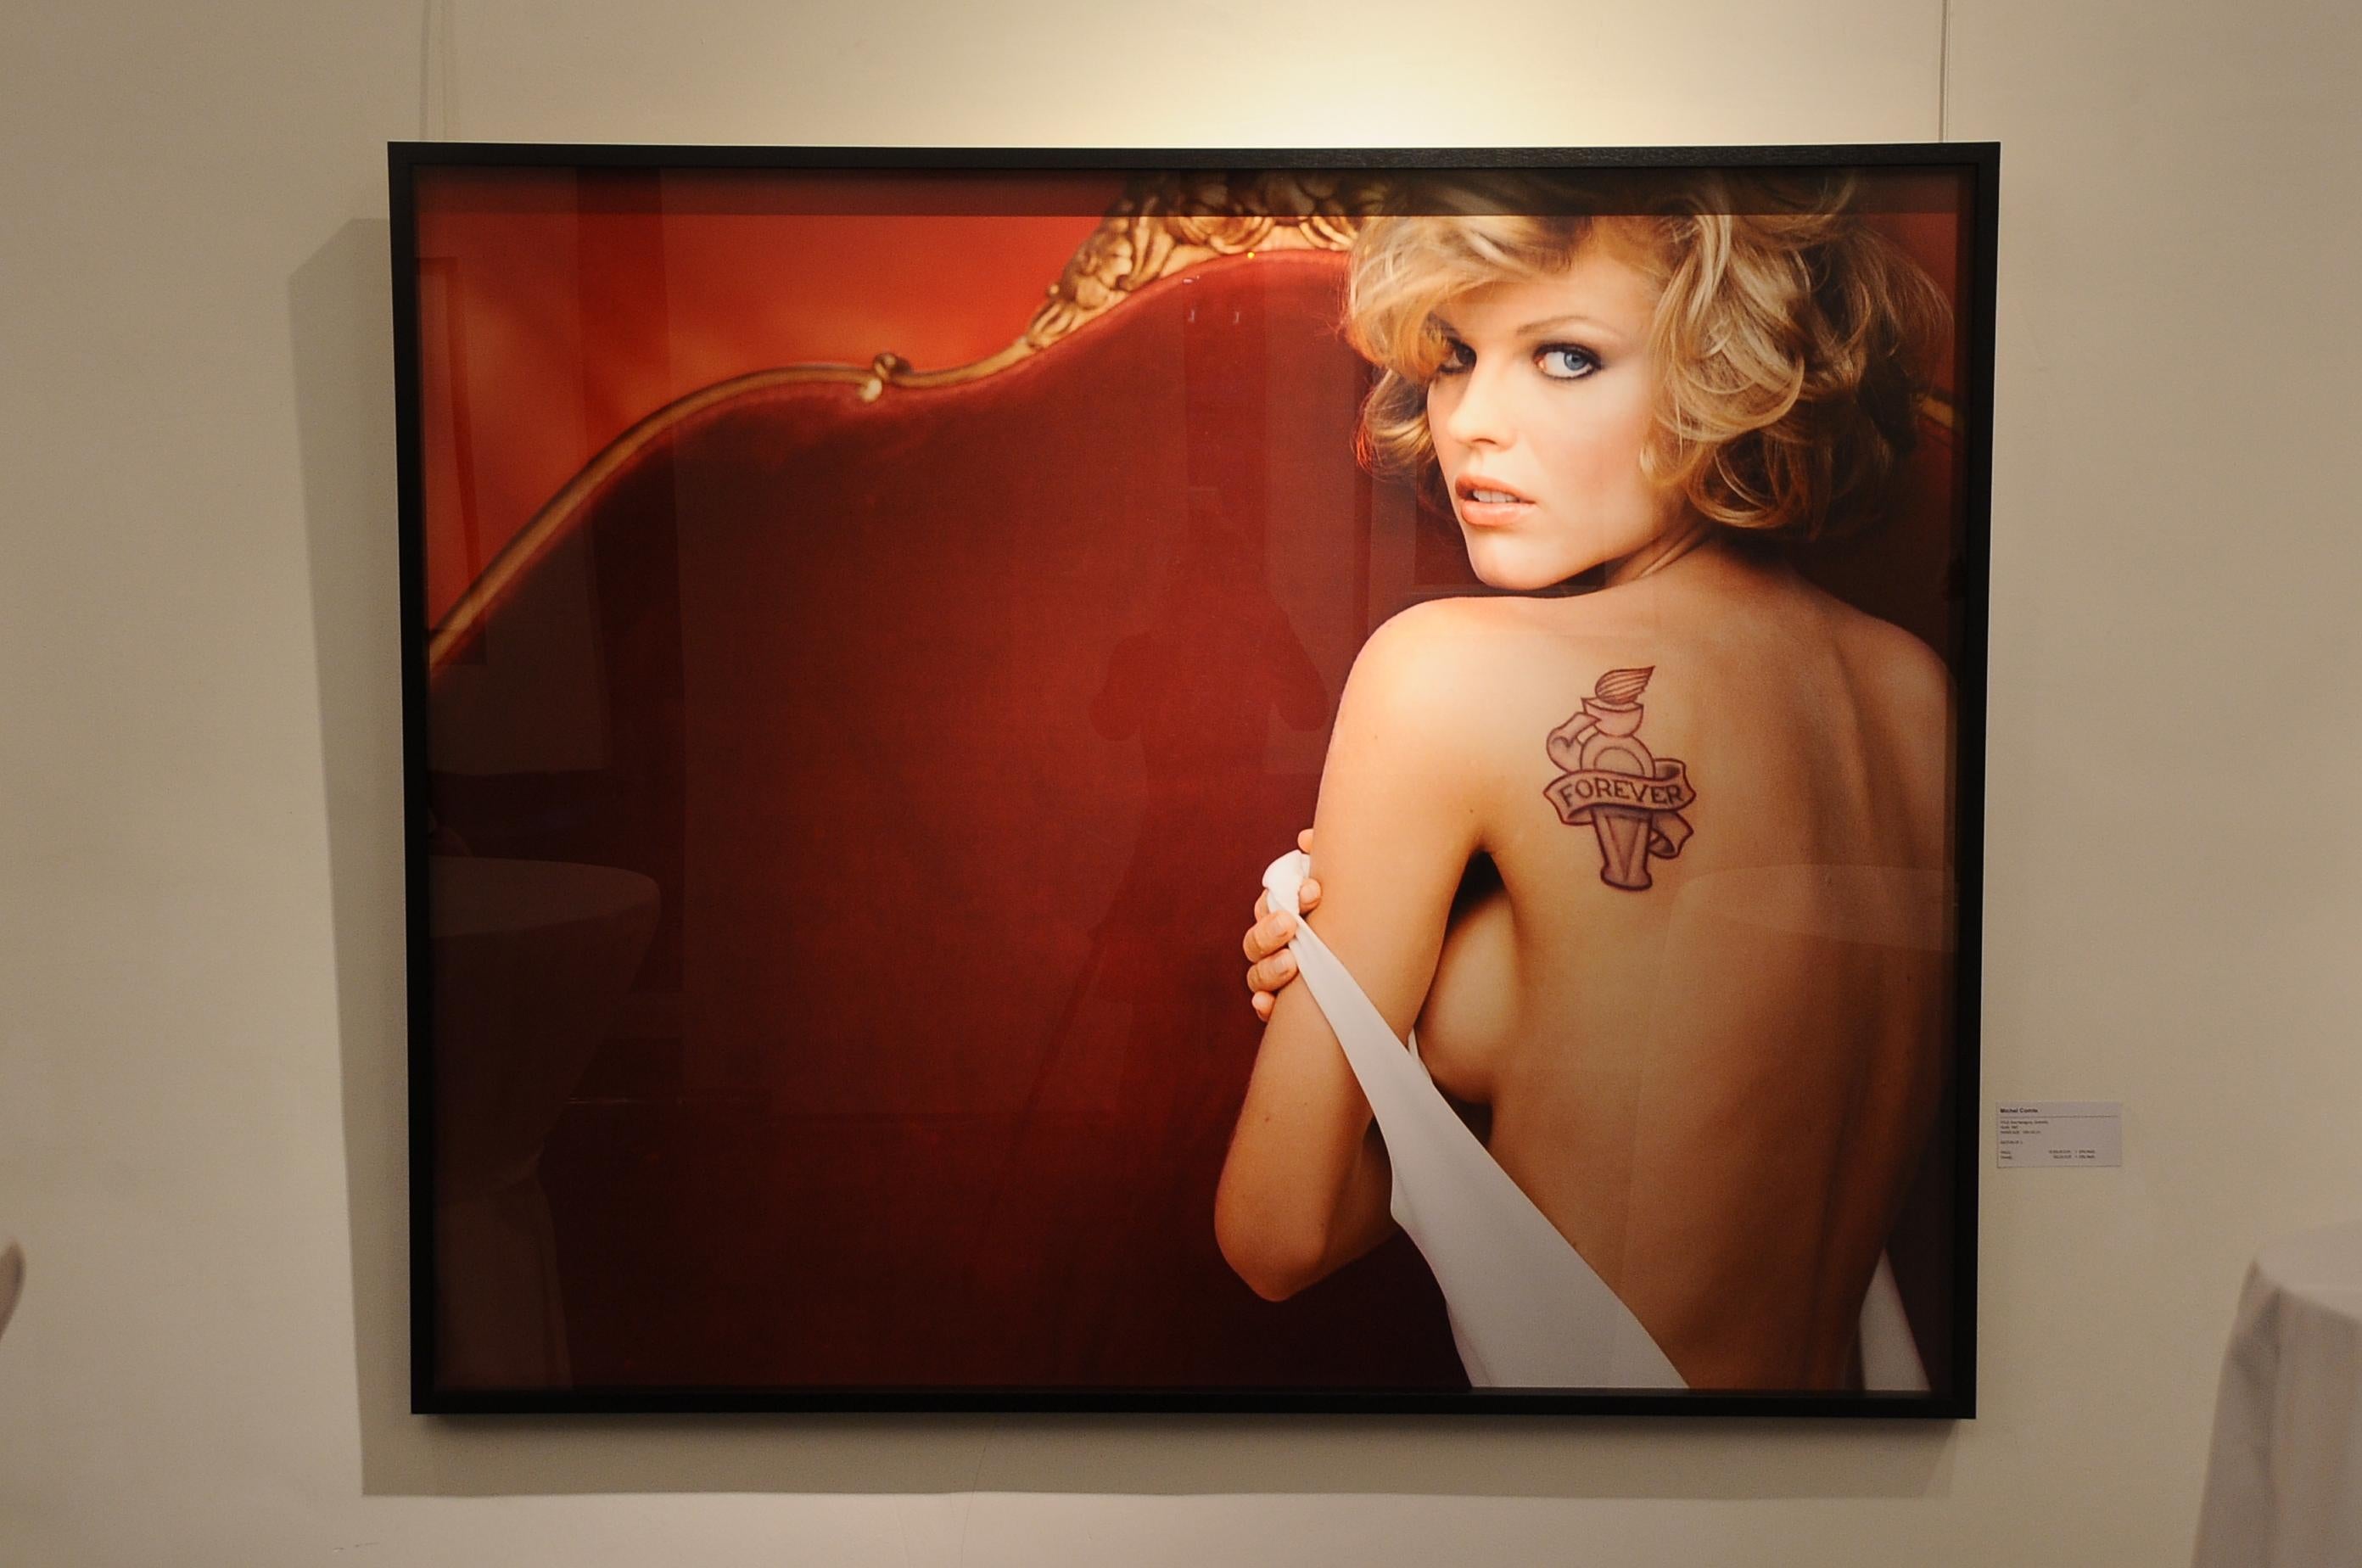 Portrait of supermodel Eva Herzigova on sofa, showing her nude back with tattoo - Photograph by Michel Comte